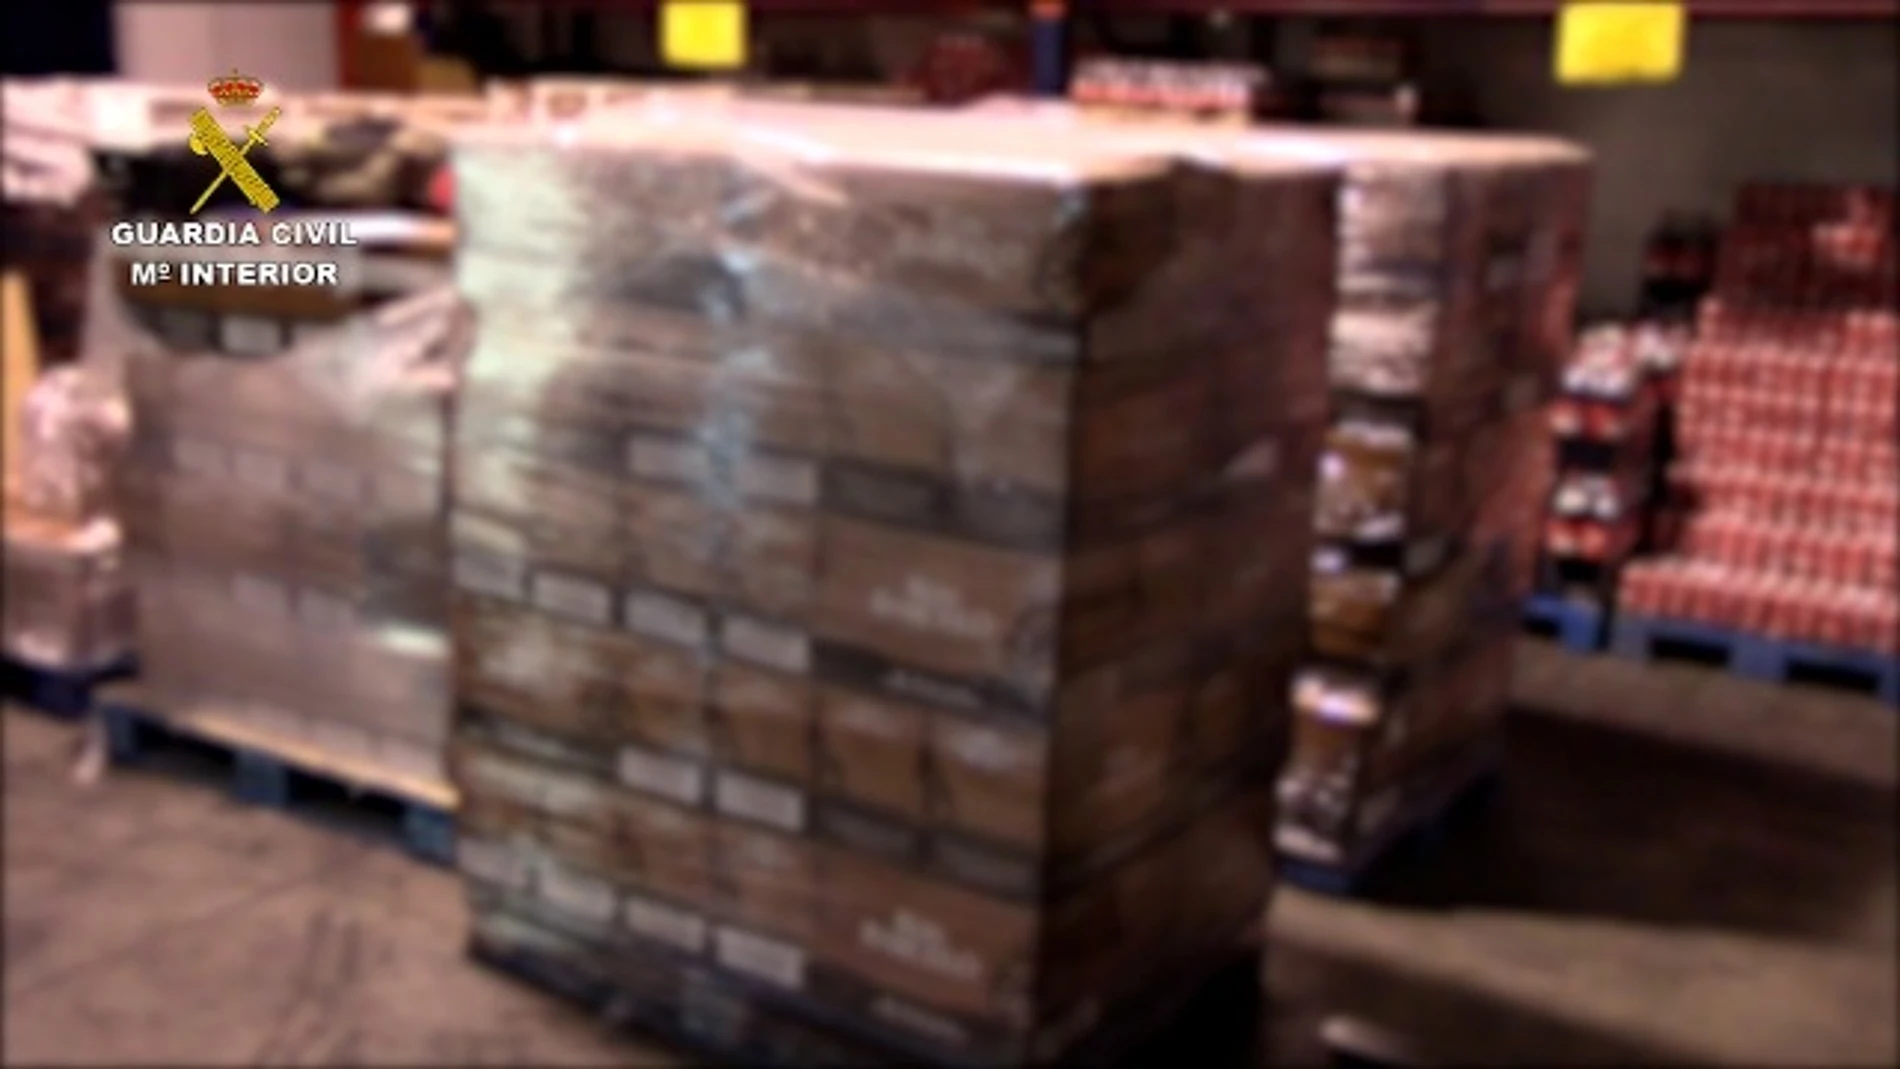 La organización introdujo en España 225.000 botellas de ron falsificadas